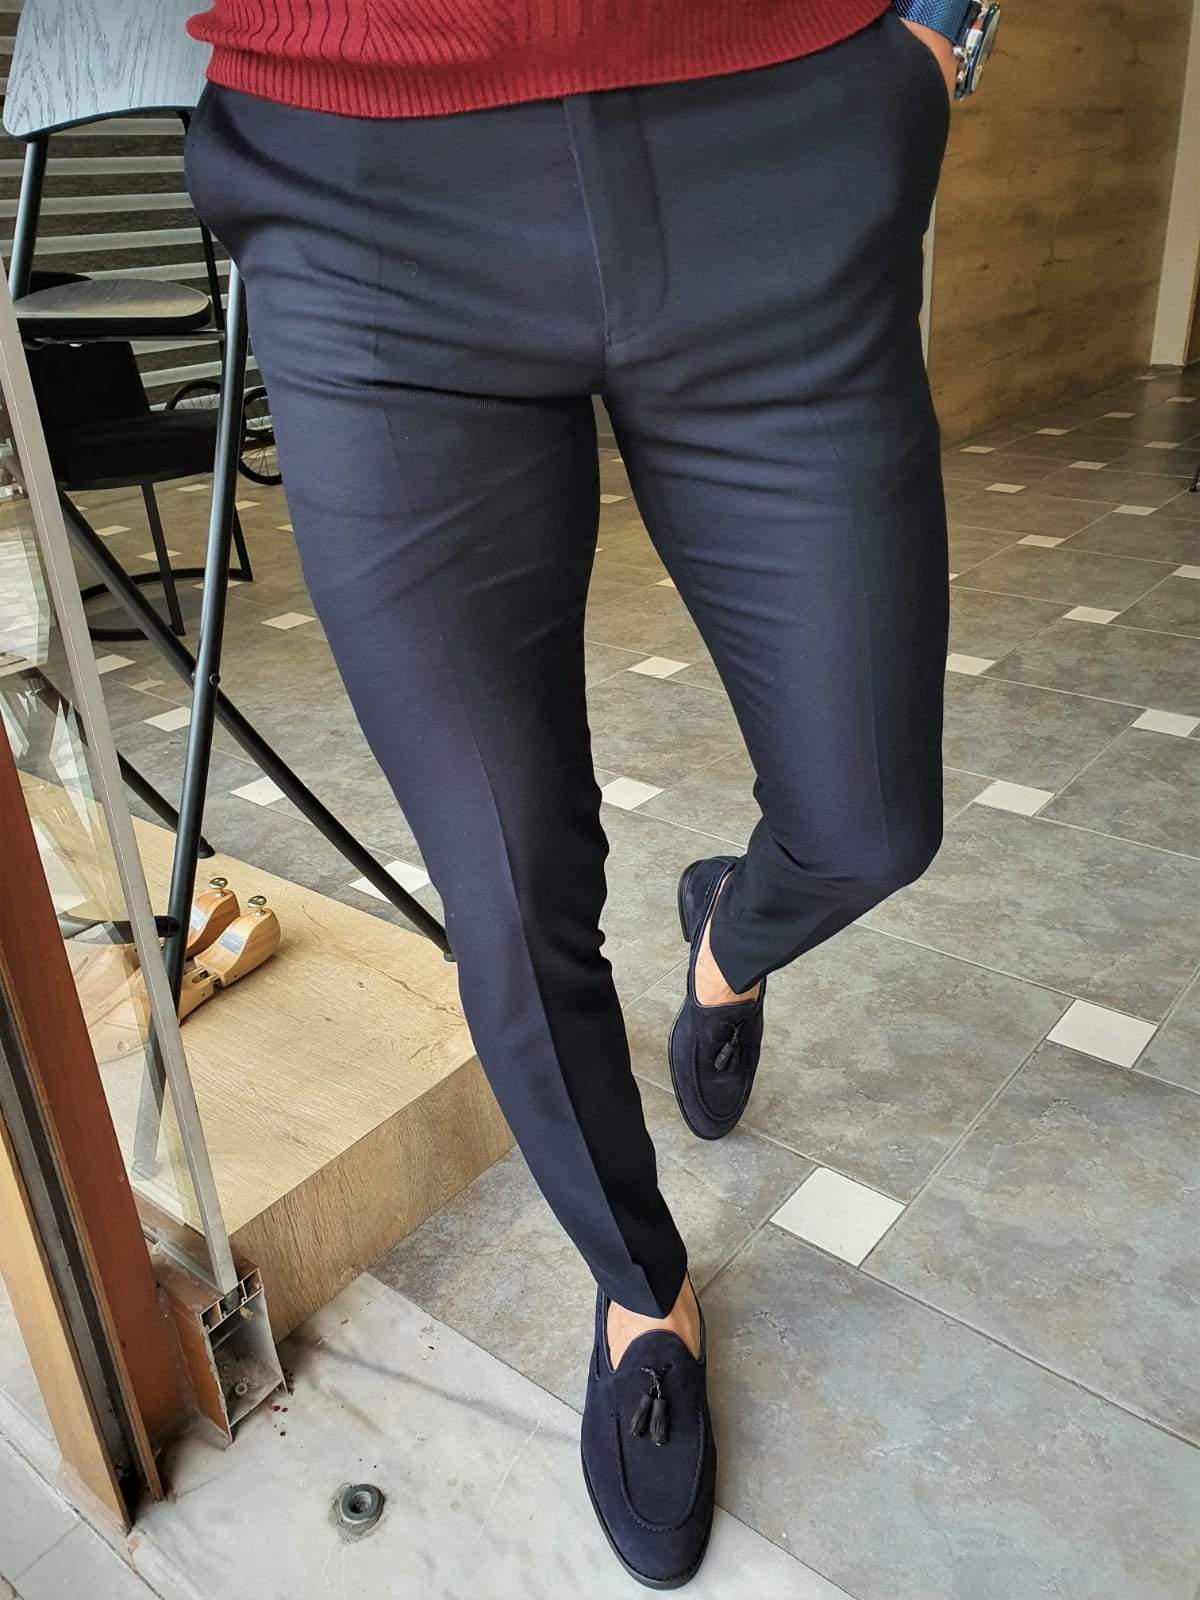 Men'S Slim Fit Dress Pants No Iron Premiu Formal Pants Dress Slacks Classic  Fit Flat Front Stretch Chino Pant (29,Black), Black, 29 at Amazon Men's  Clothing store